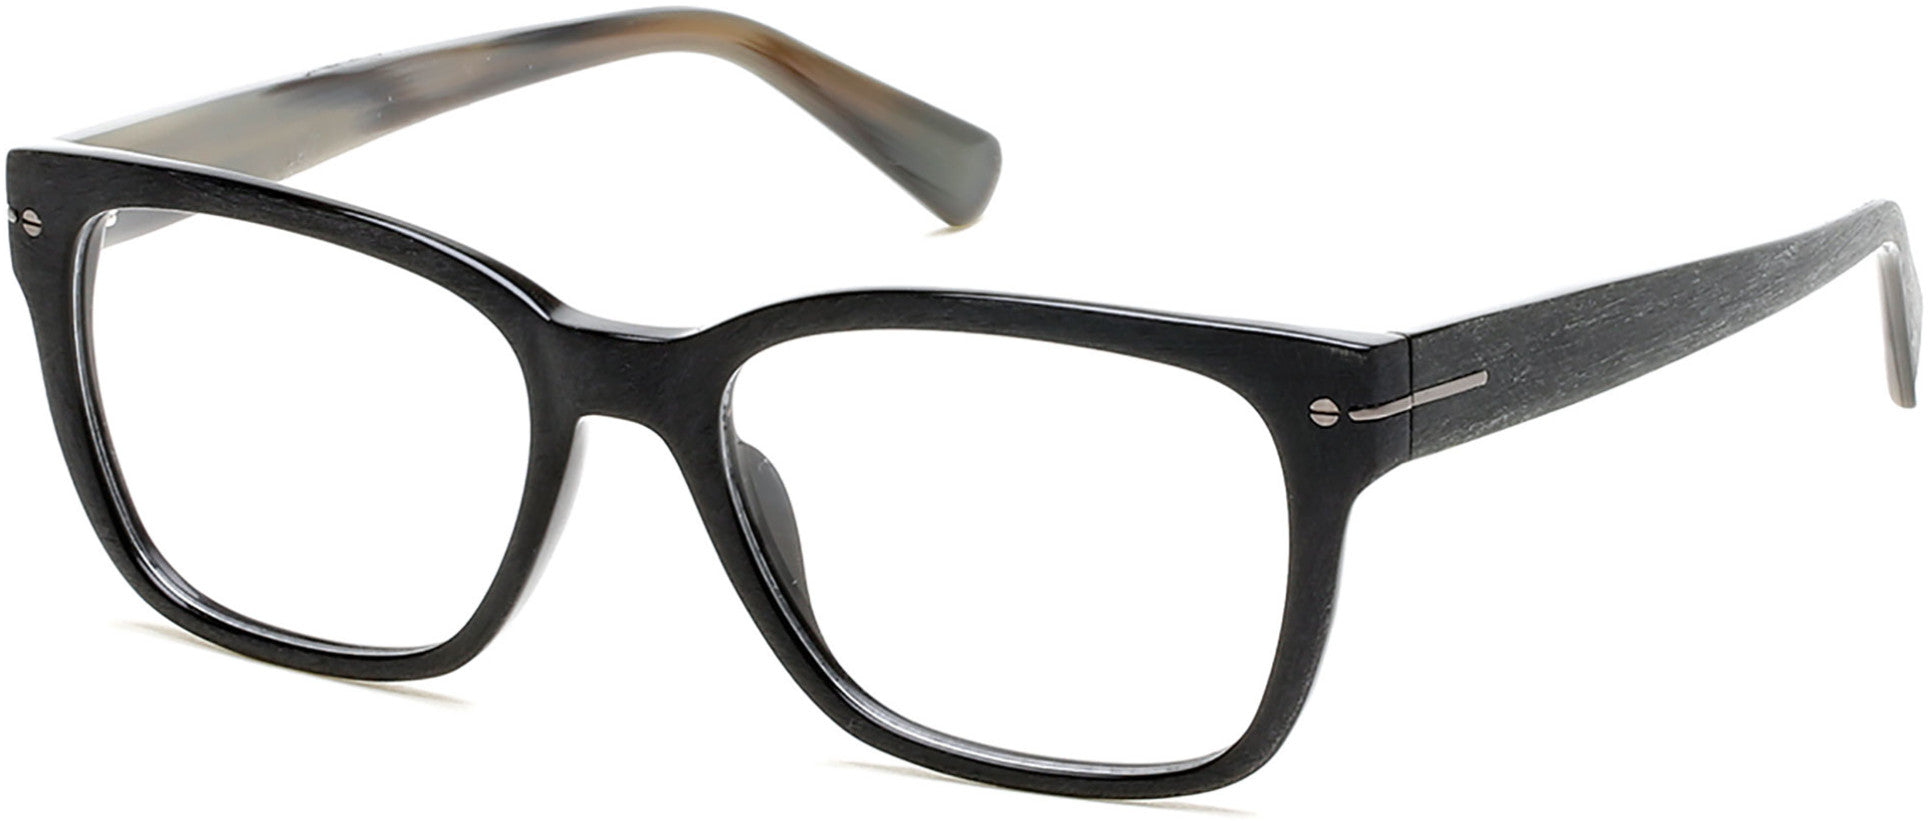 Kenneth Cole New York,Kenneth Cole Reaction KC0236 Eyeglasses 005-005 - Black/other